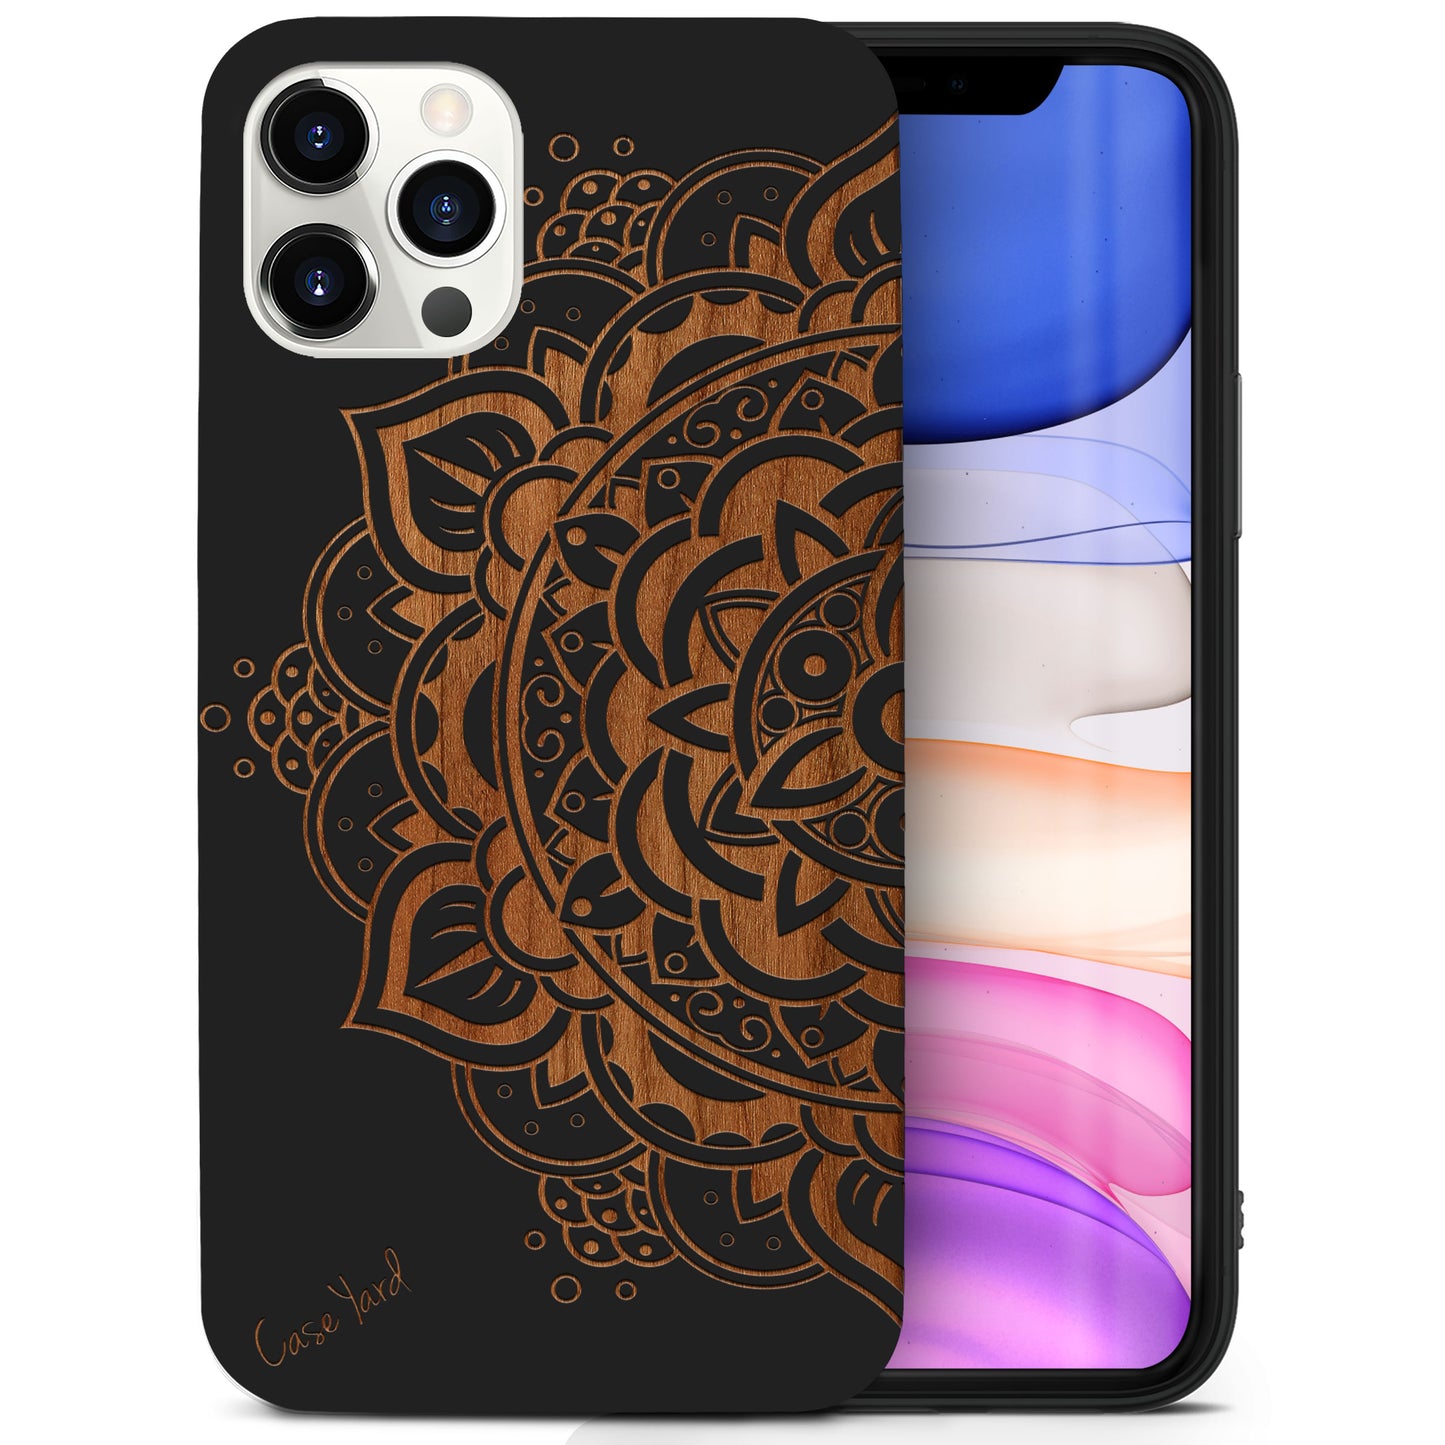 Wooden Cell Phone Case Cover, Laser Engraved case for iPhone & Samsung phone Half Flower Mandala Design